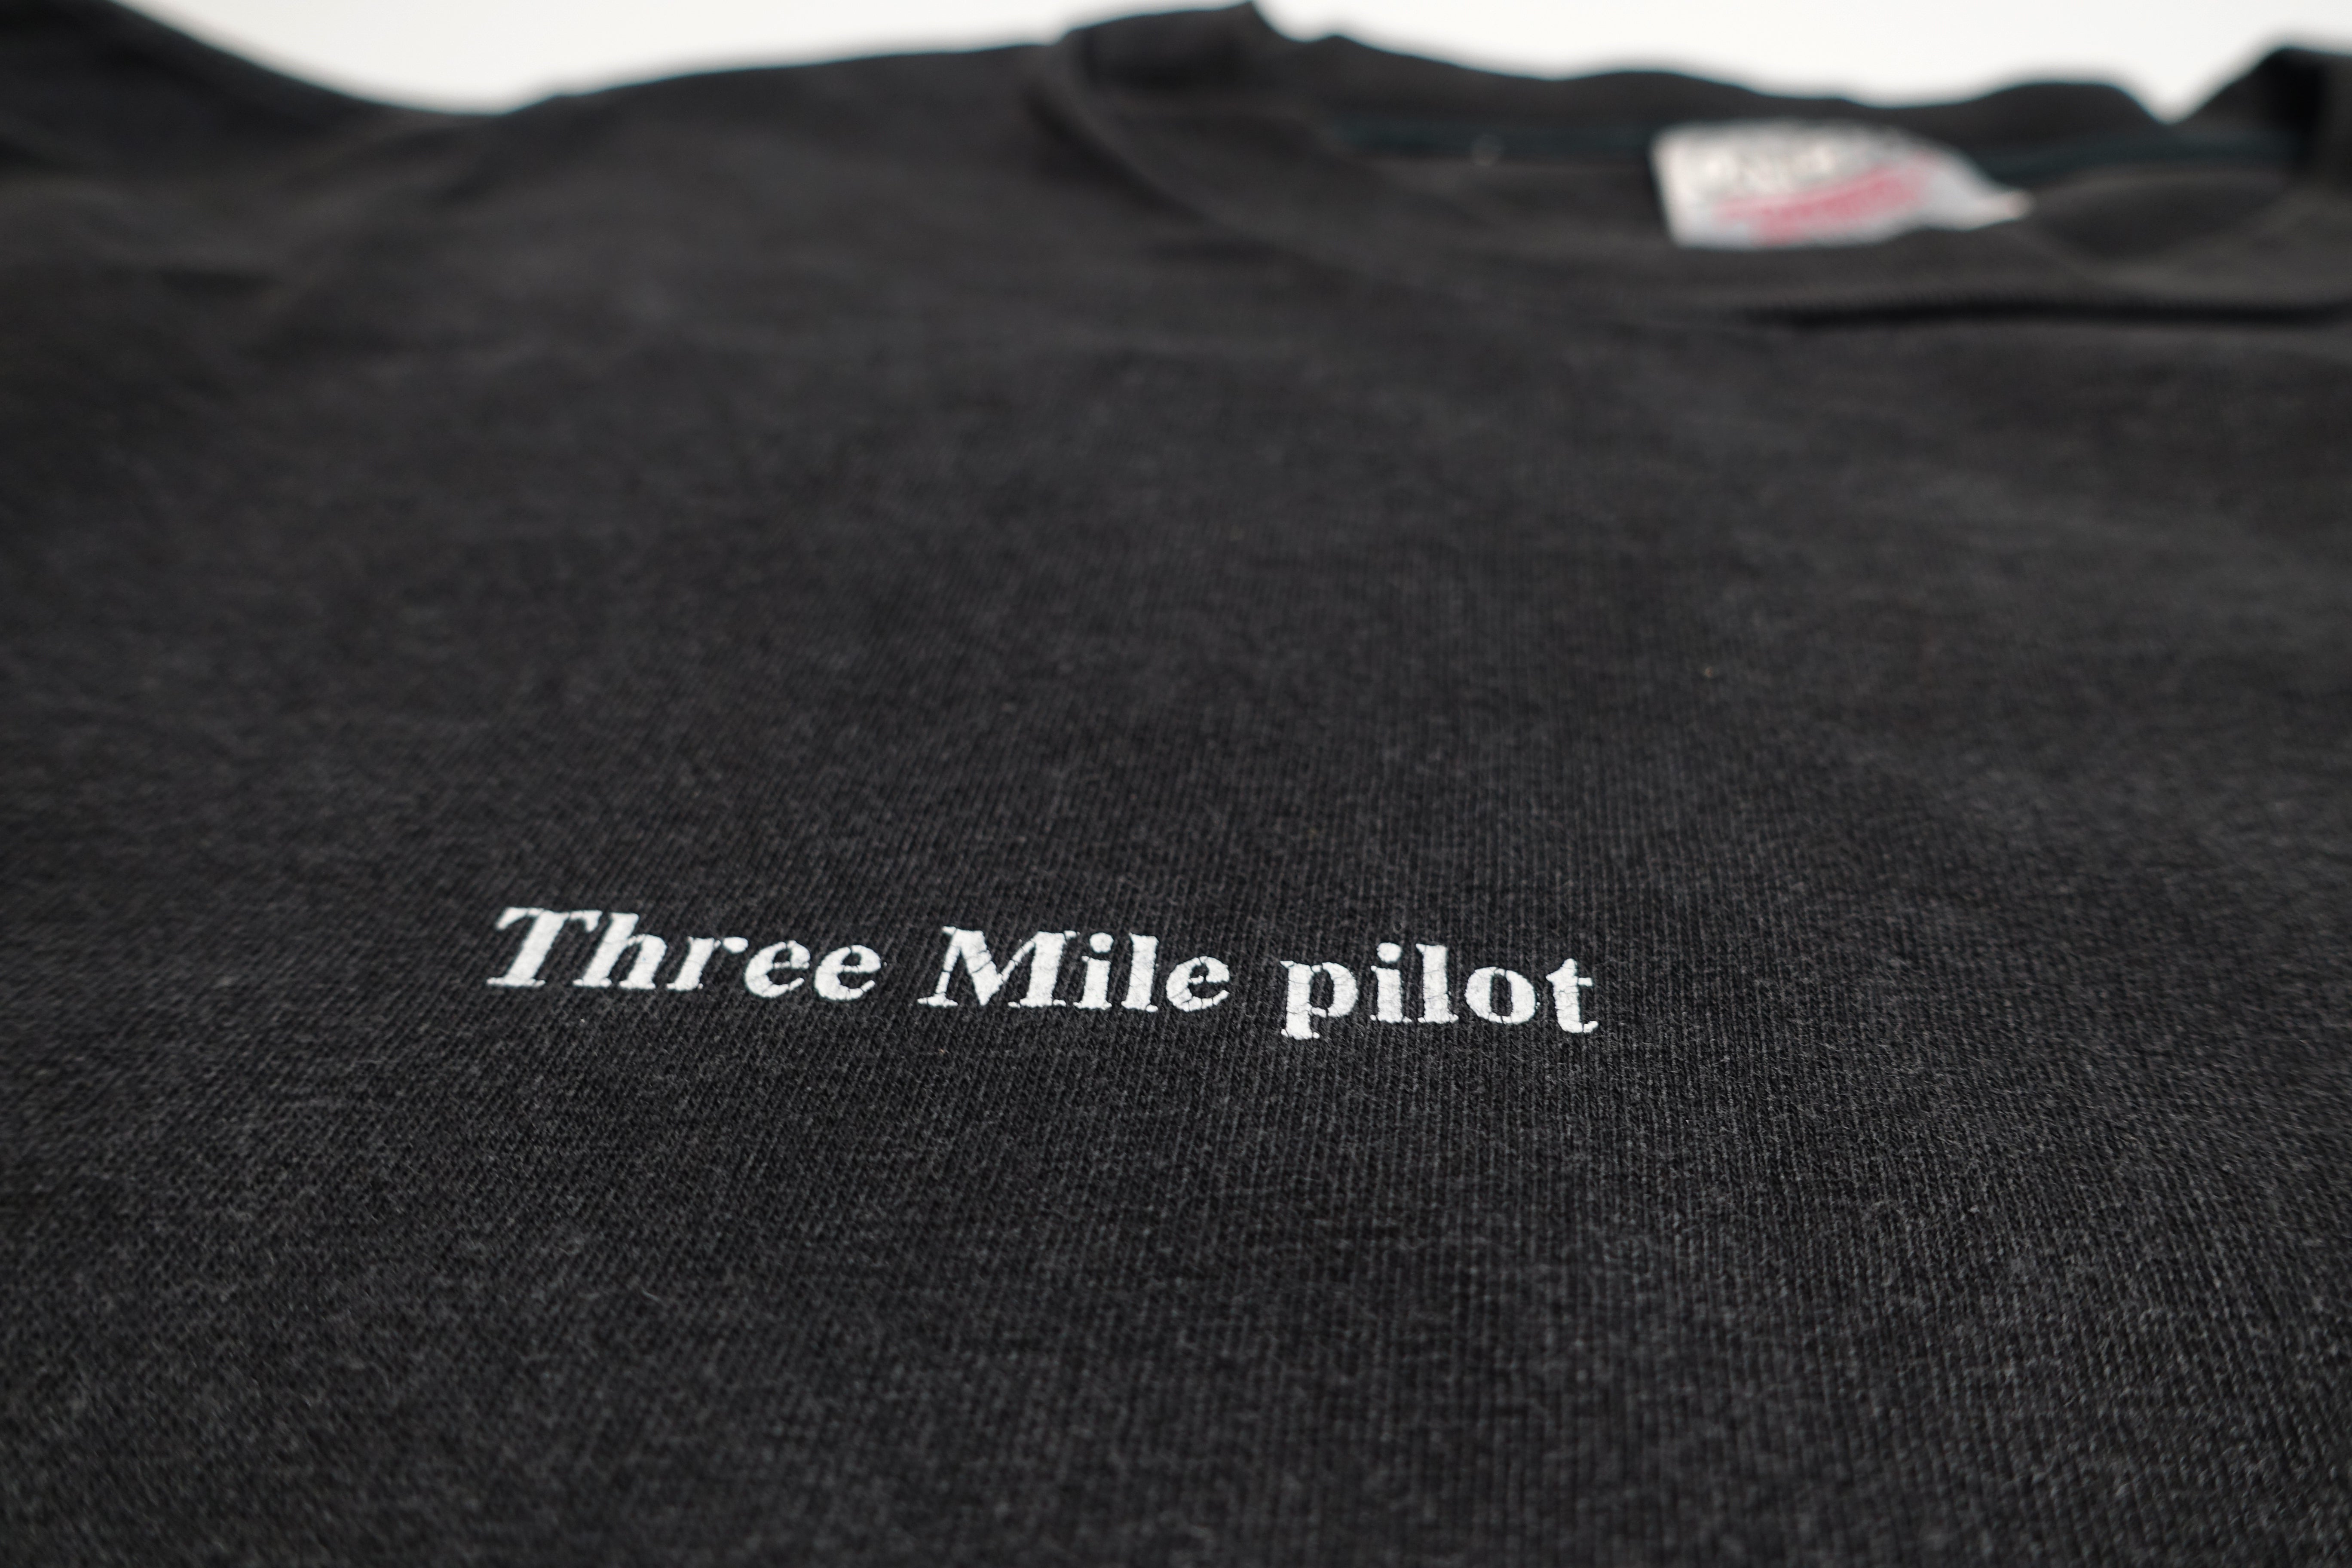 Three Mile Pilot - Escape Hatch / Chief Assassin To The Sinister 1994 Tour Shirt Size XL